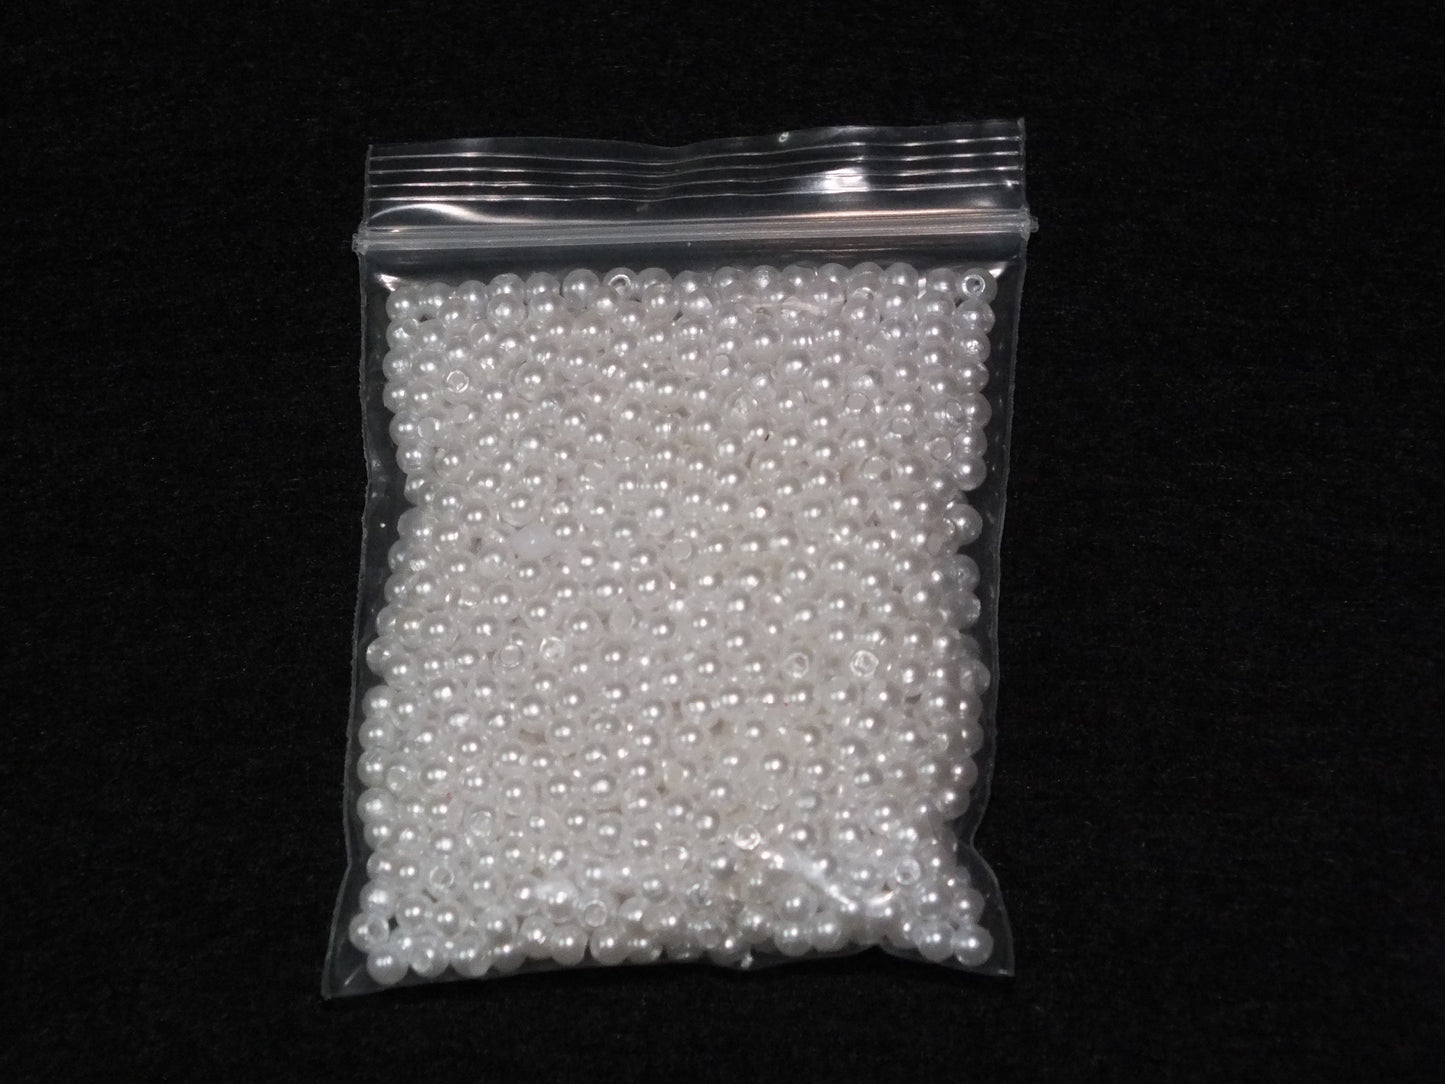 1,000pcs - 10,000pcs white 3mm imitation pearl acrylic beads